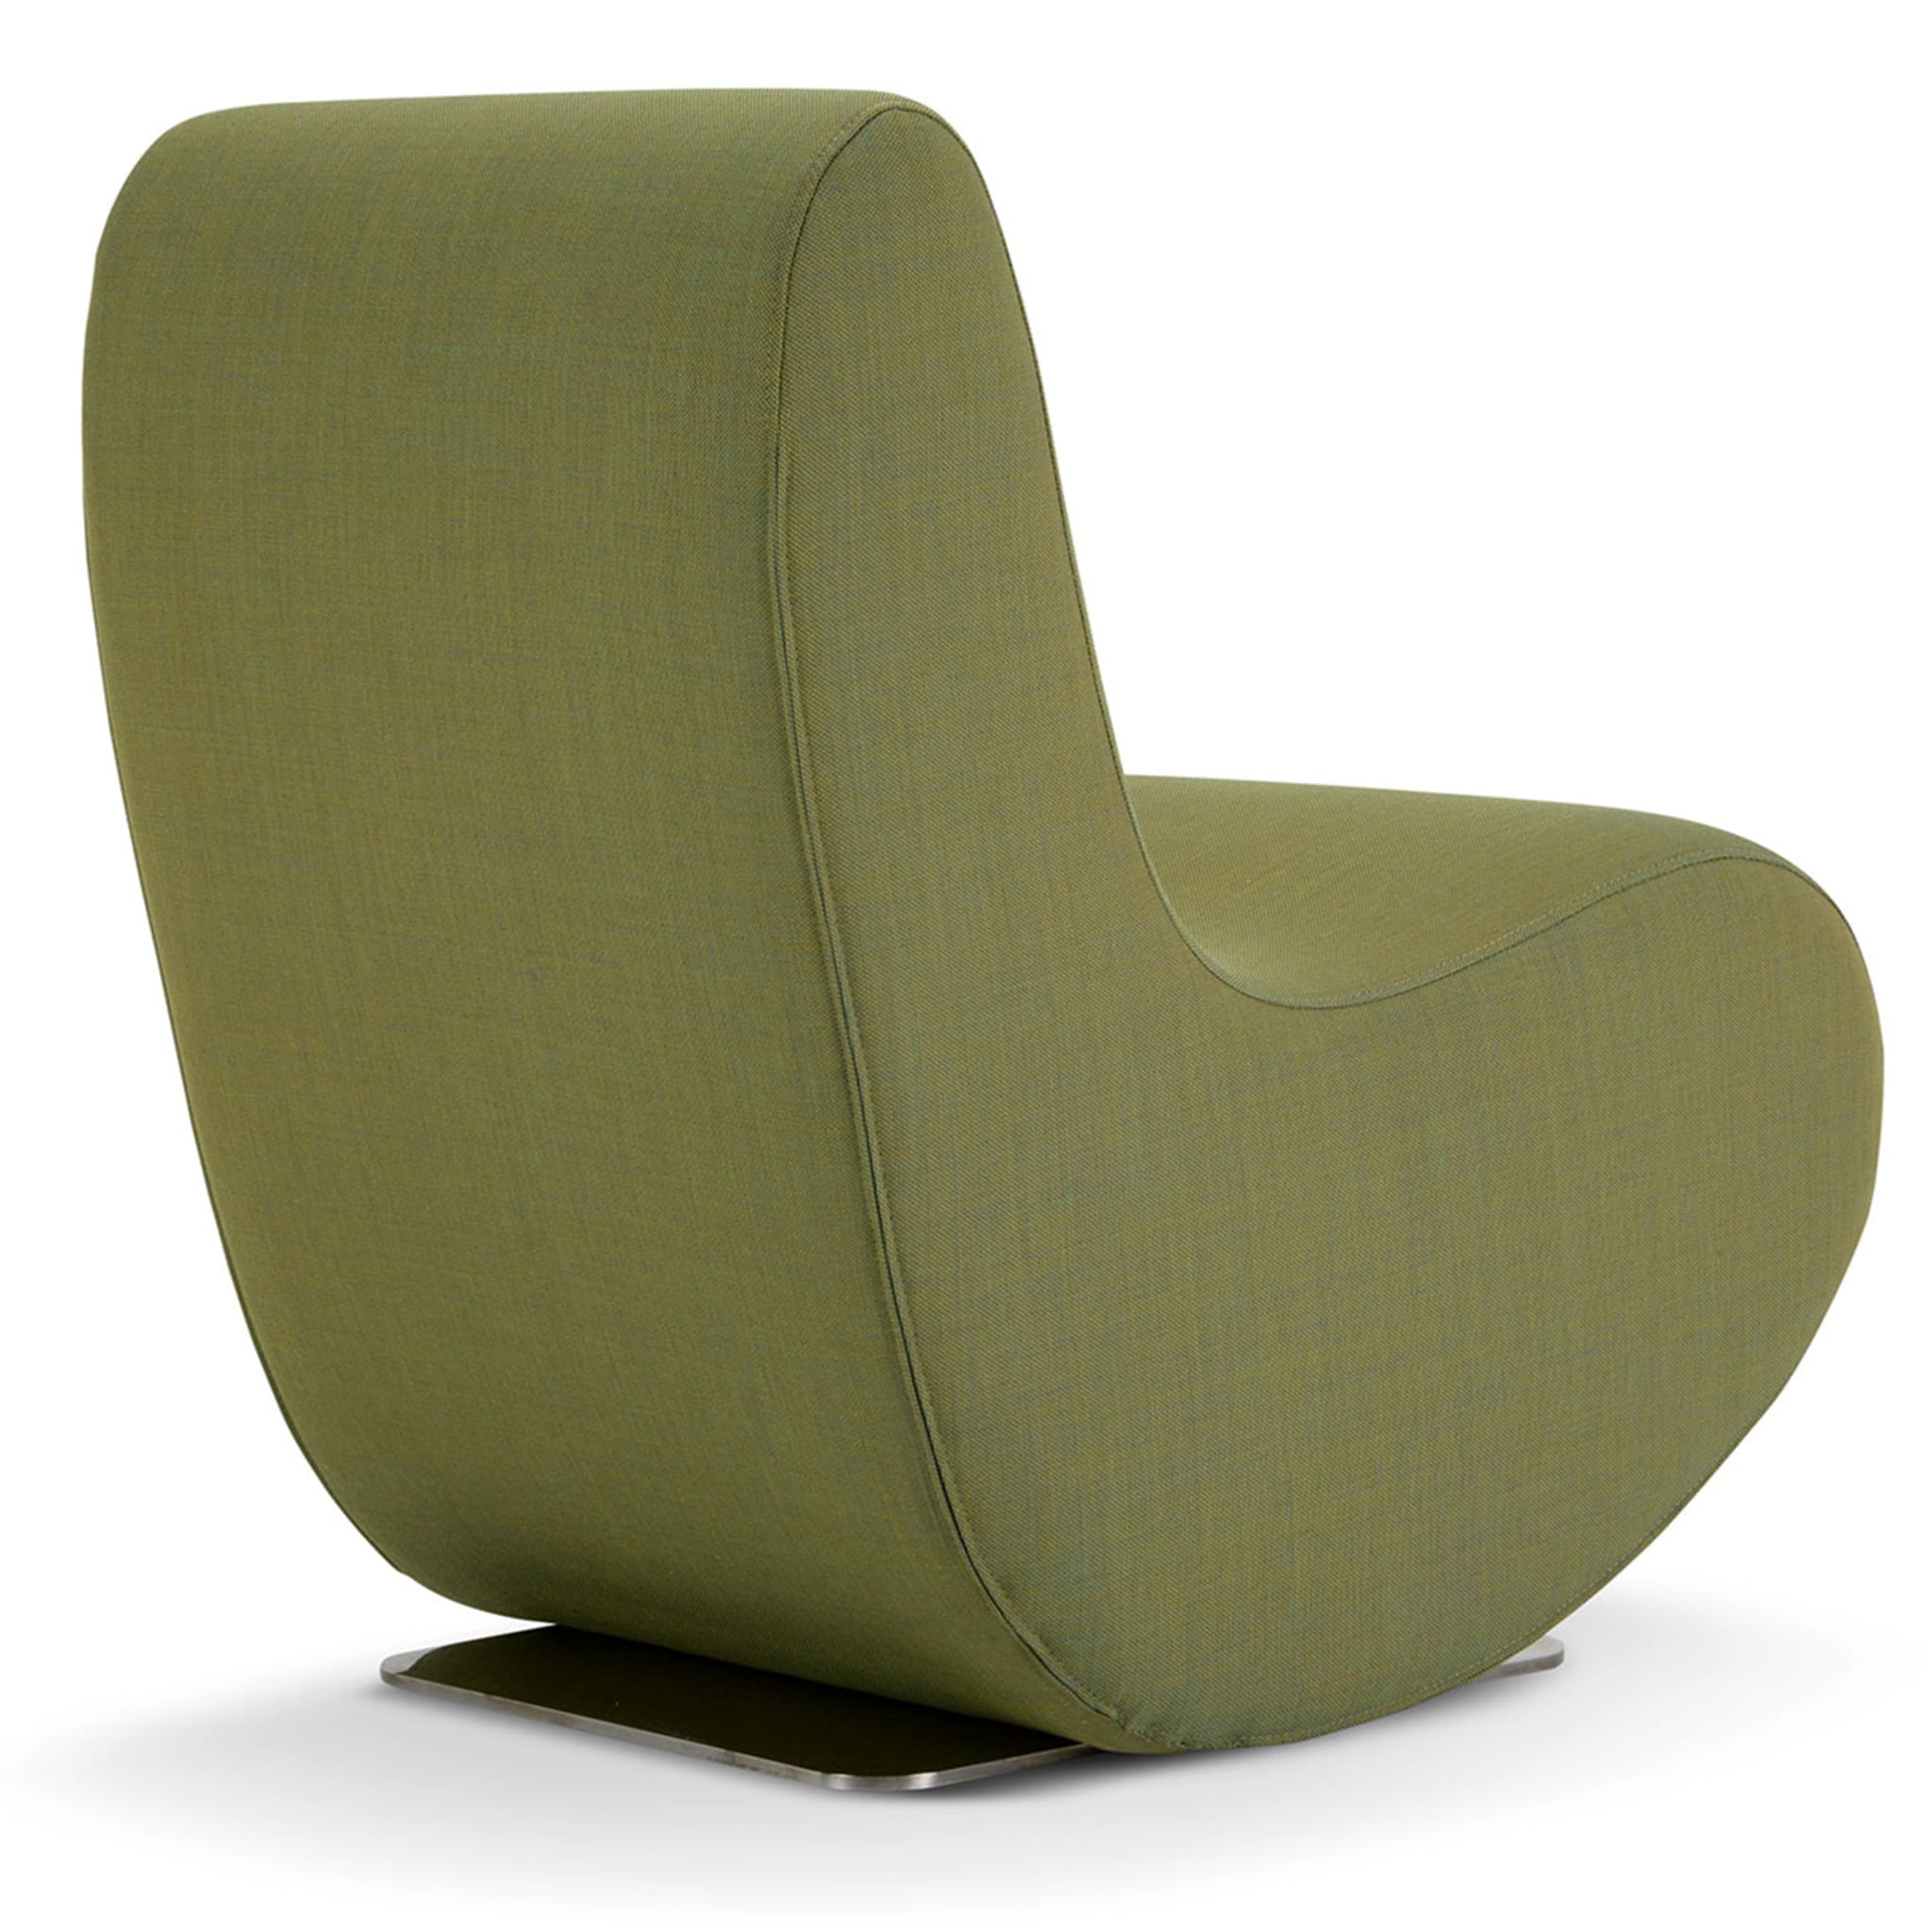 Nina Green Lounge Chair by Simone Micheli - Alternative view 2